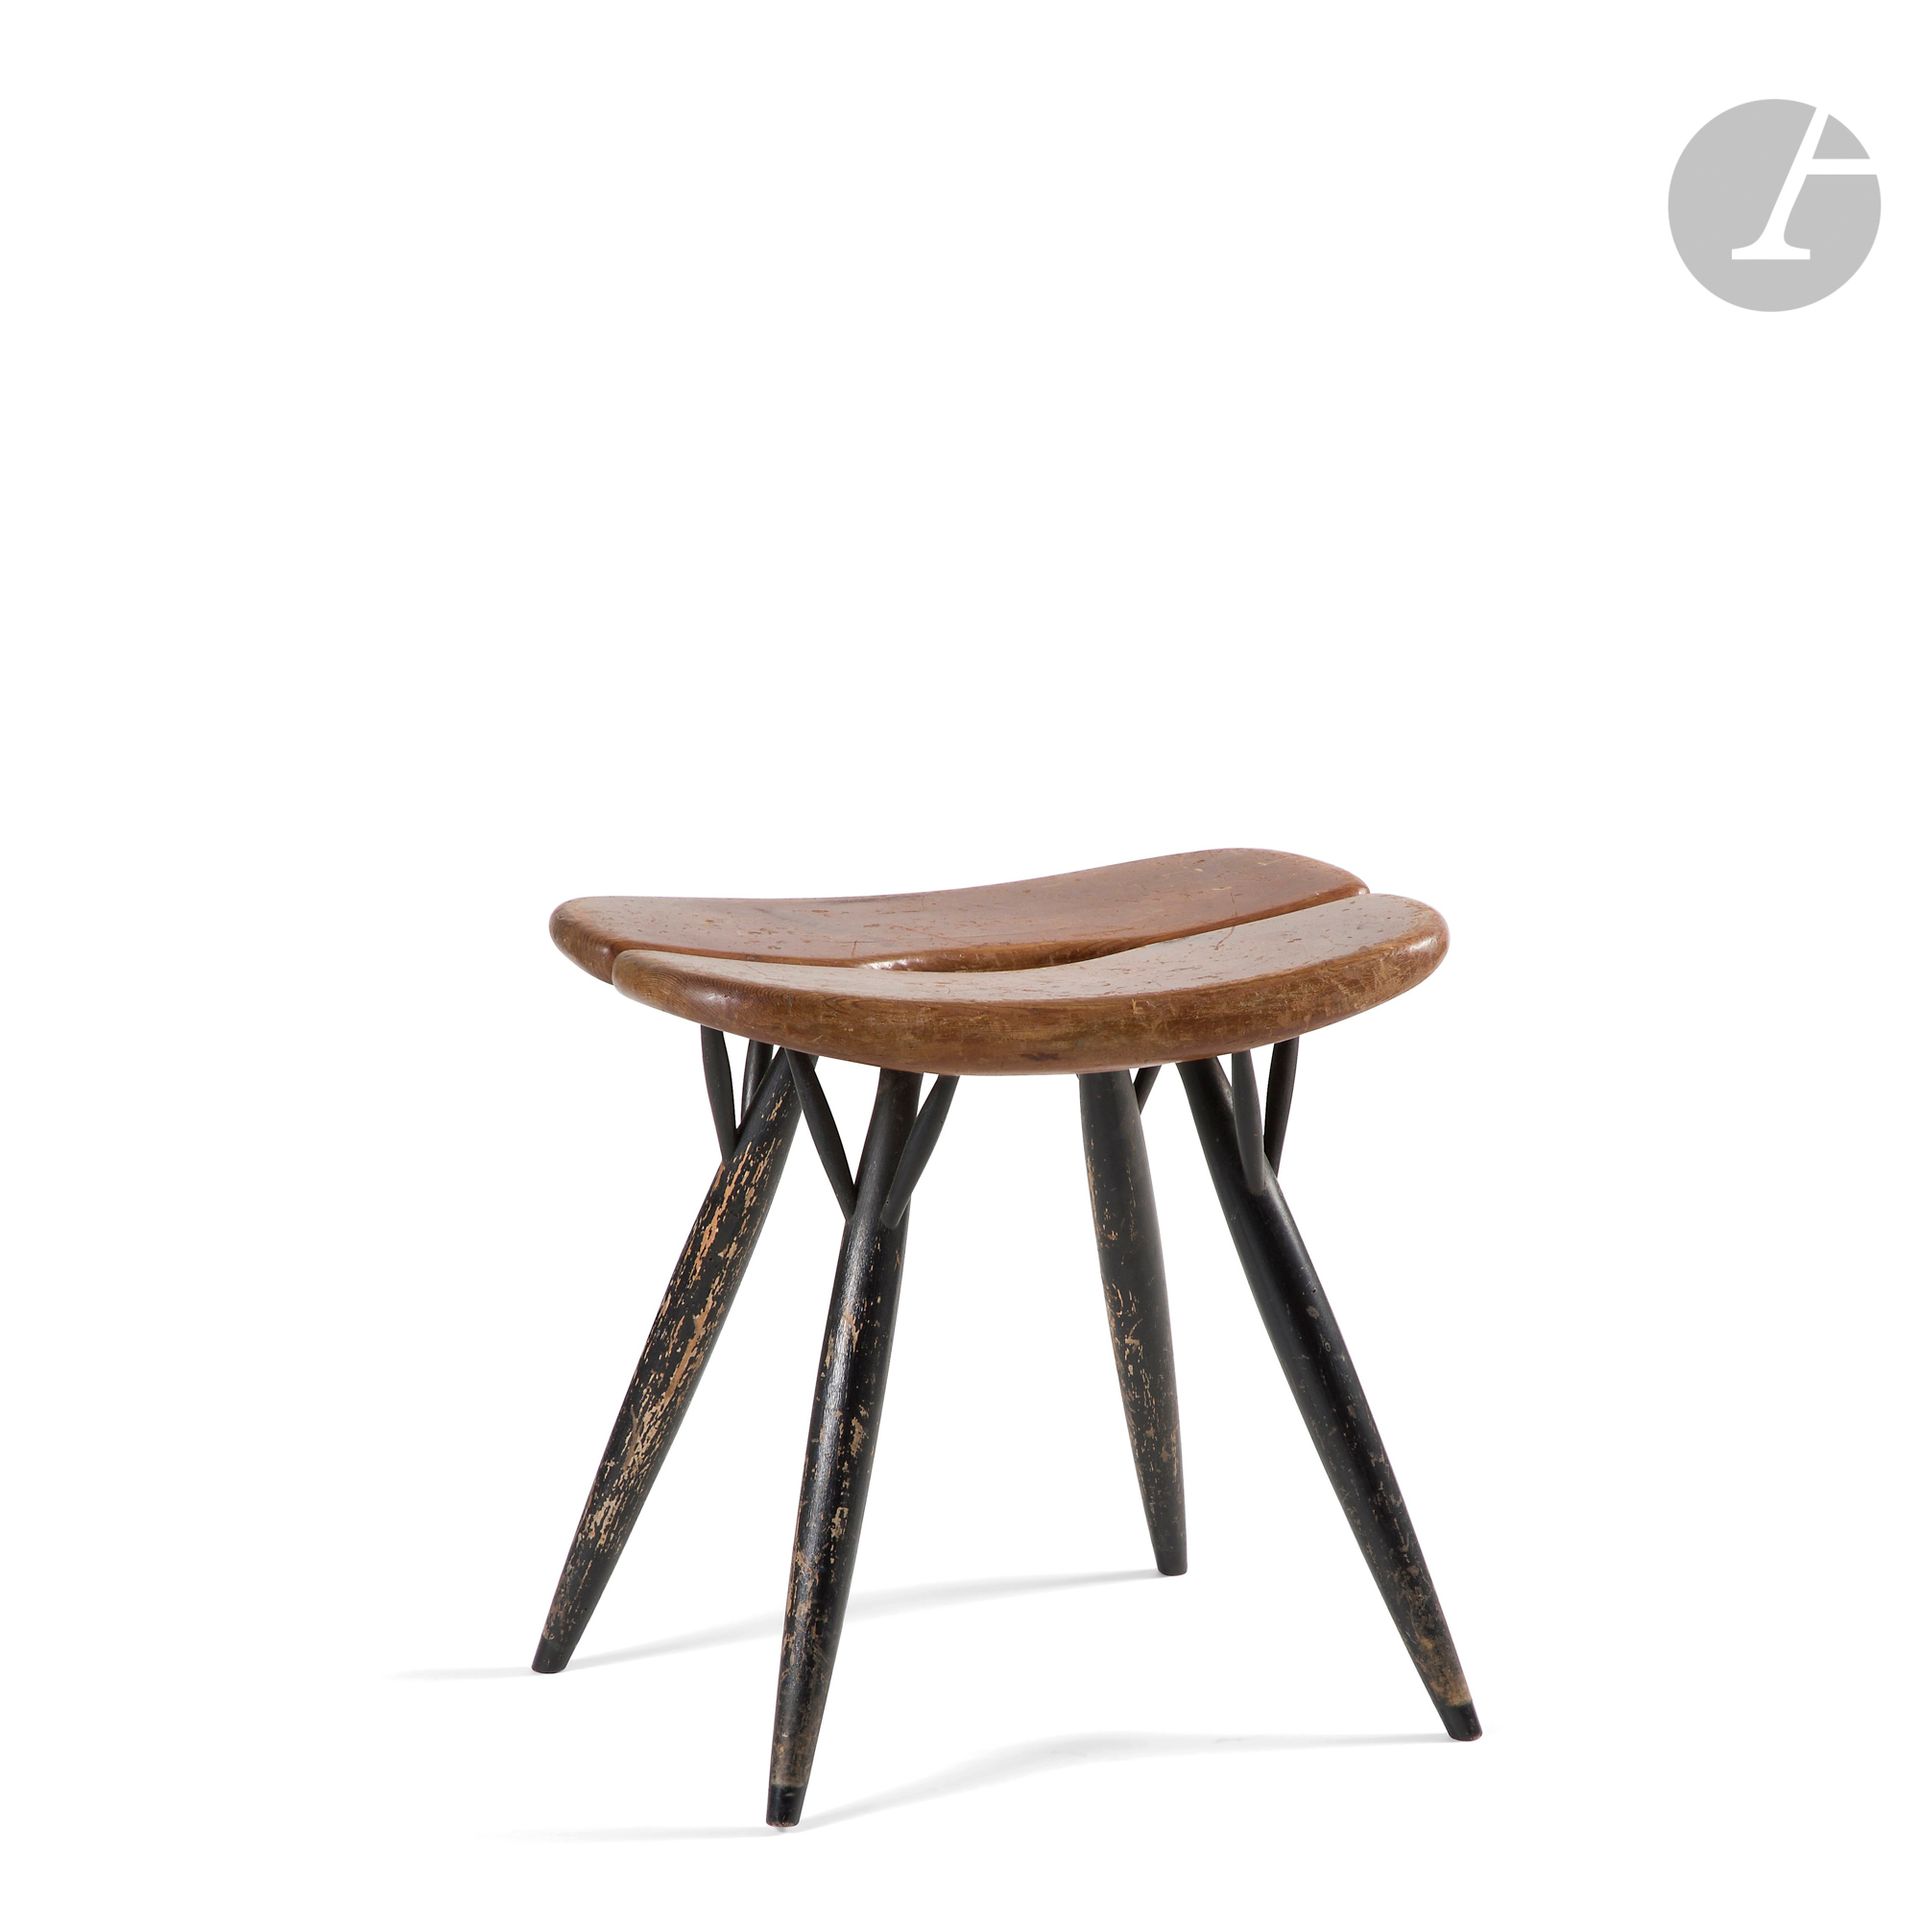 Null ilmari tapiovaara (1914-1999) 设计师& laukaan pu出版商
皮尔卡
四条腿的凳子。松木，部分棕色清漆，部分黑色漆&hellip;